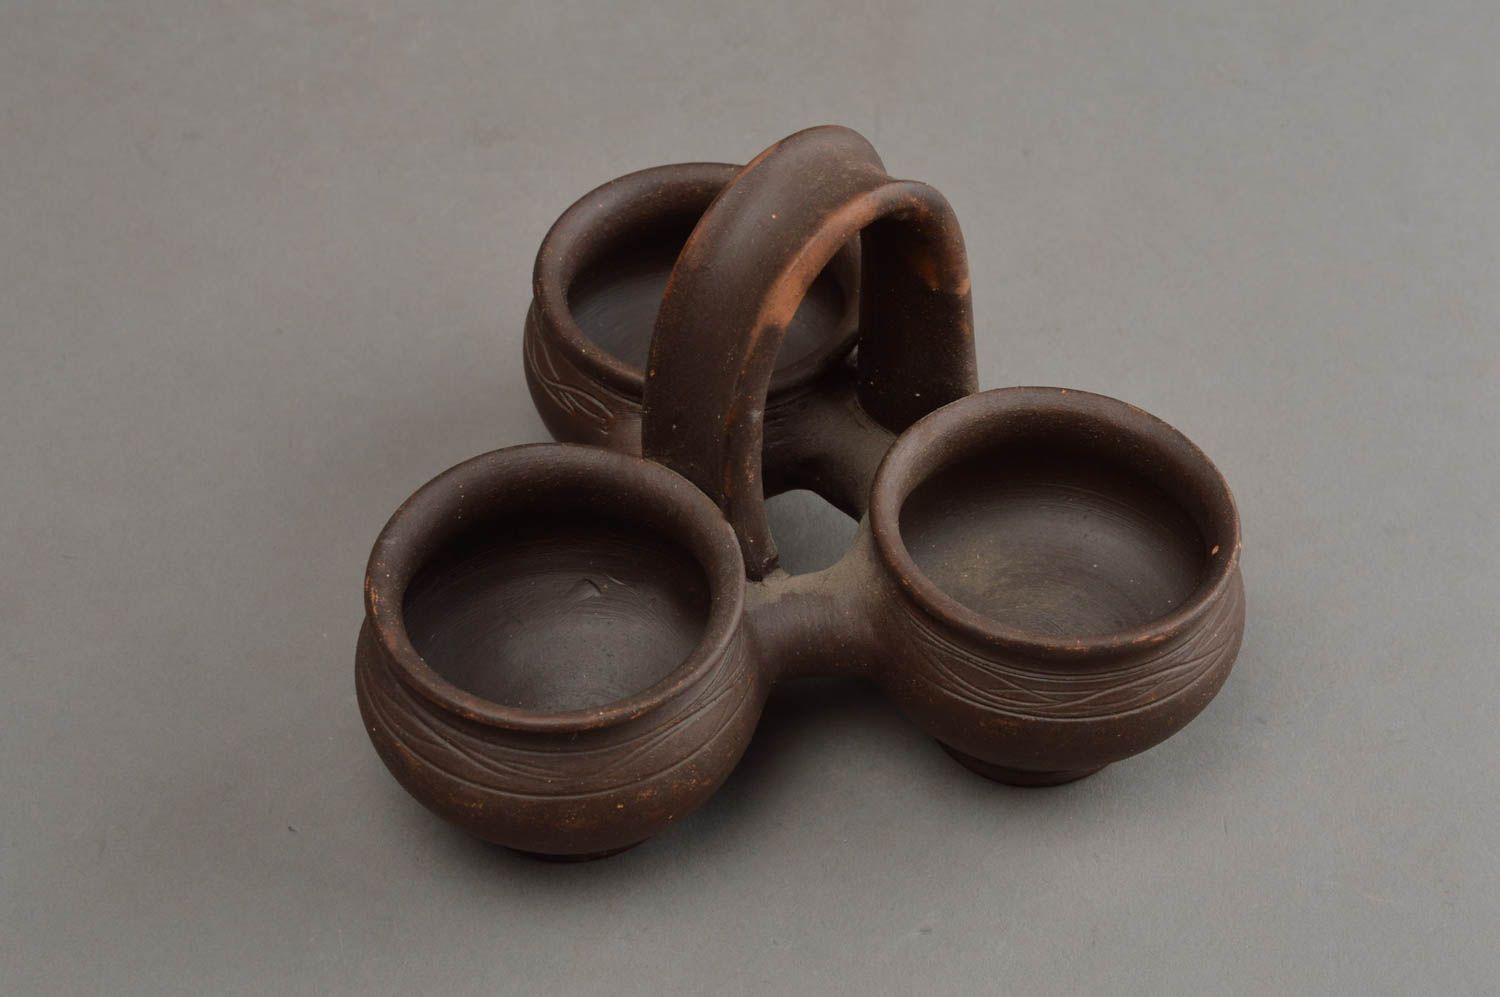 Gravy boat ceramic dinnerware handmade ceramic pots kitchen accessories photo 3